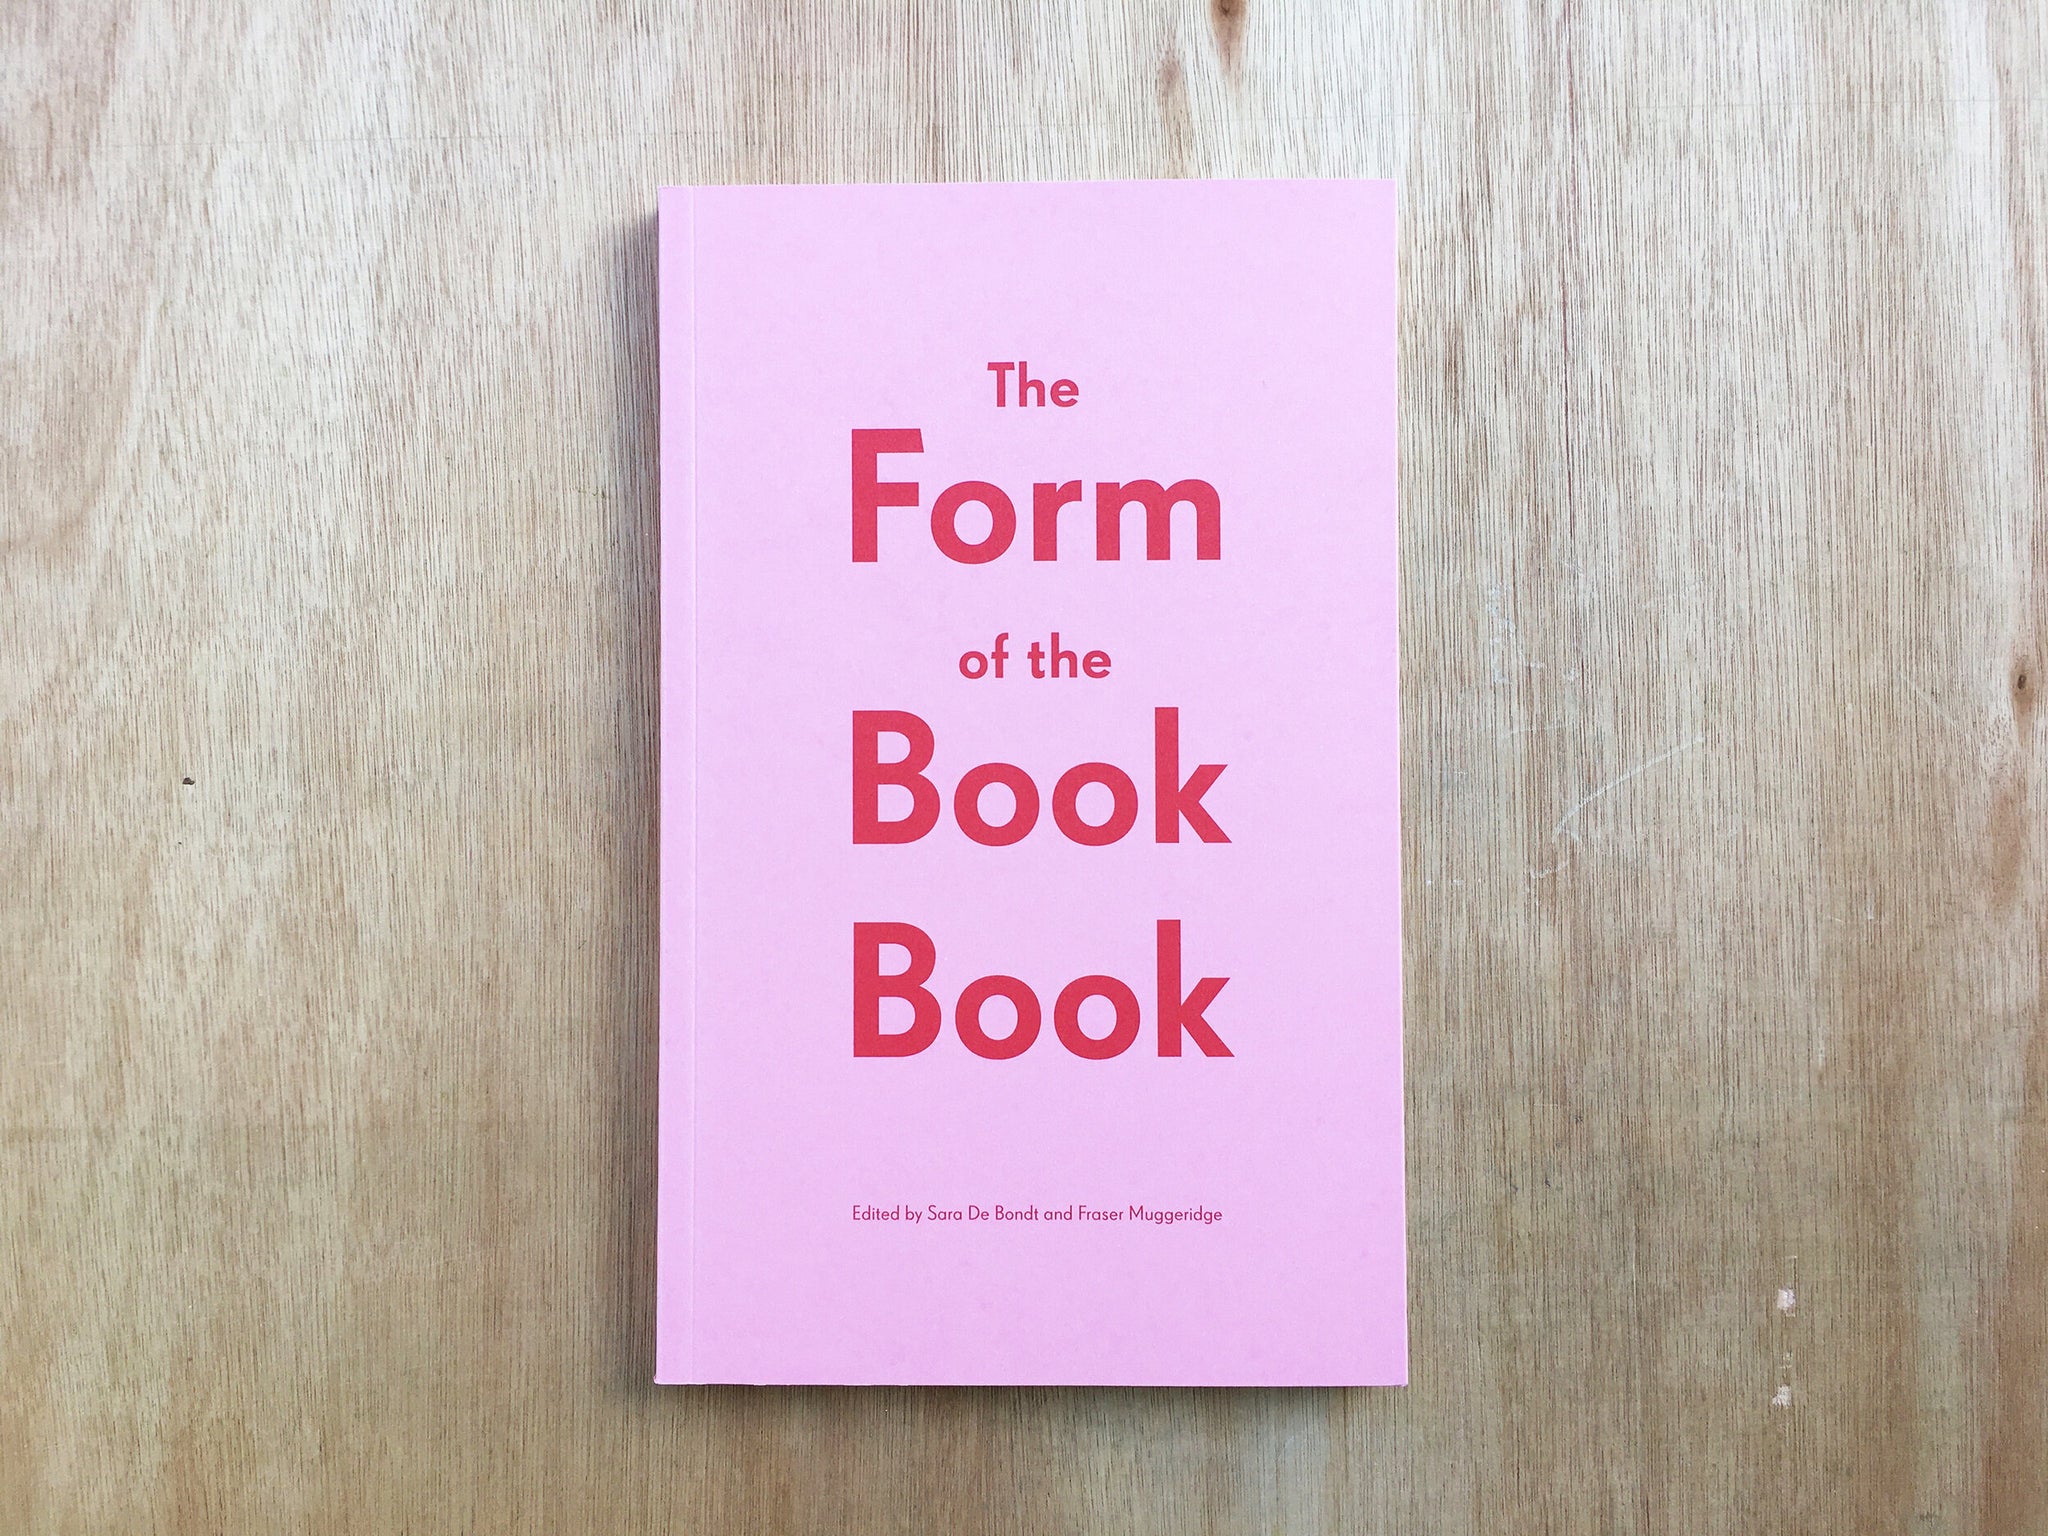 THE FORM OF THE BOOK BOOK Edited by Sara De Bondt and Fraser Muggeridge